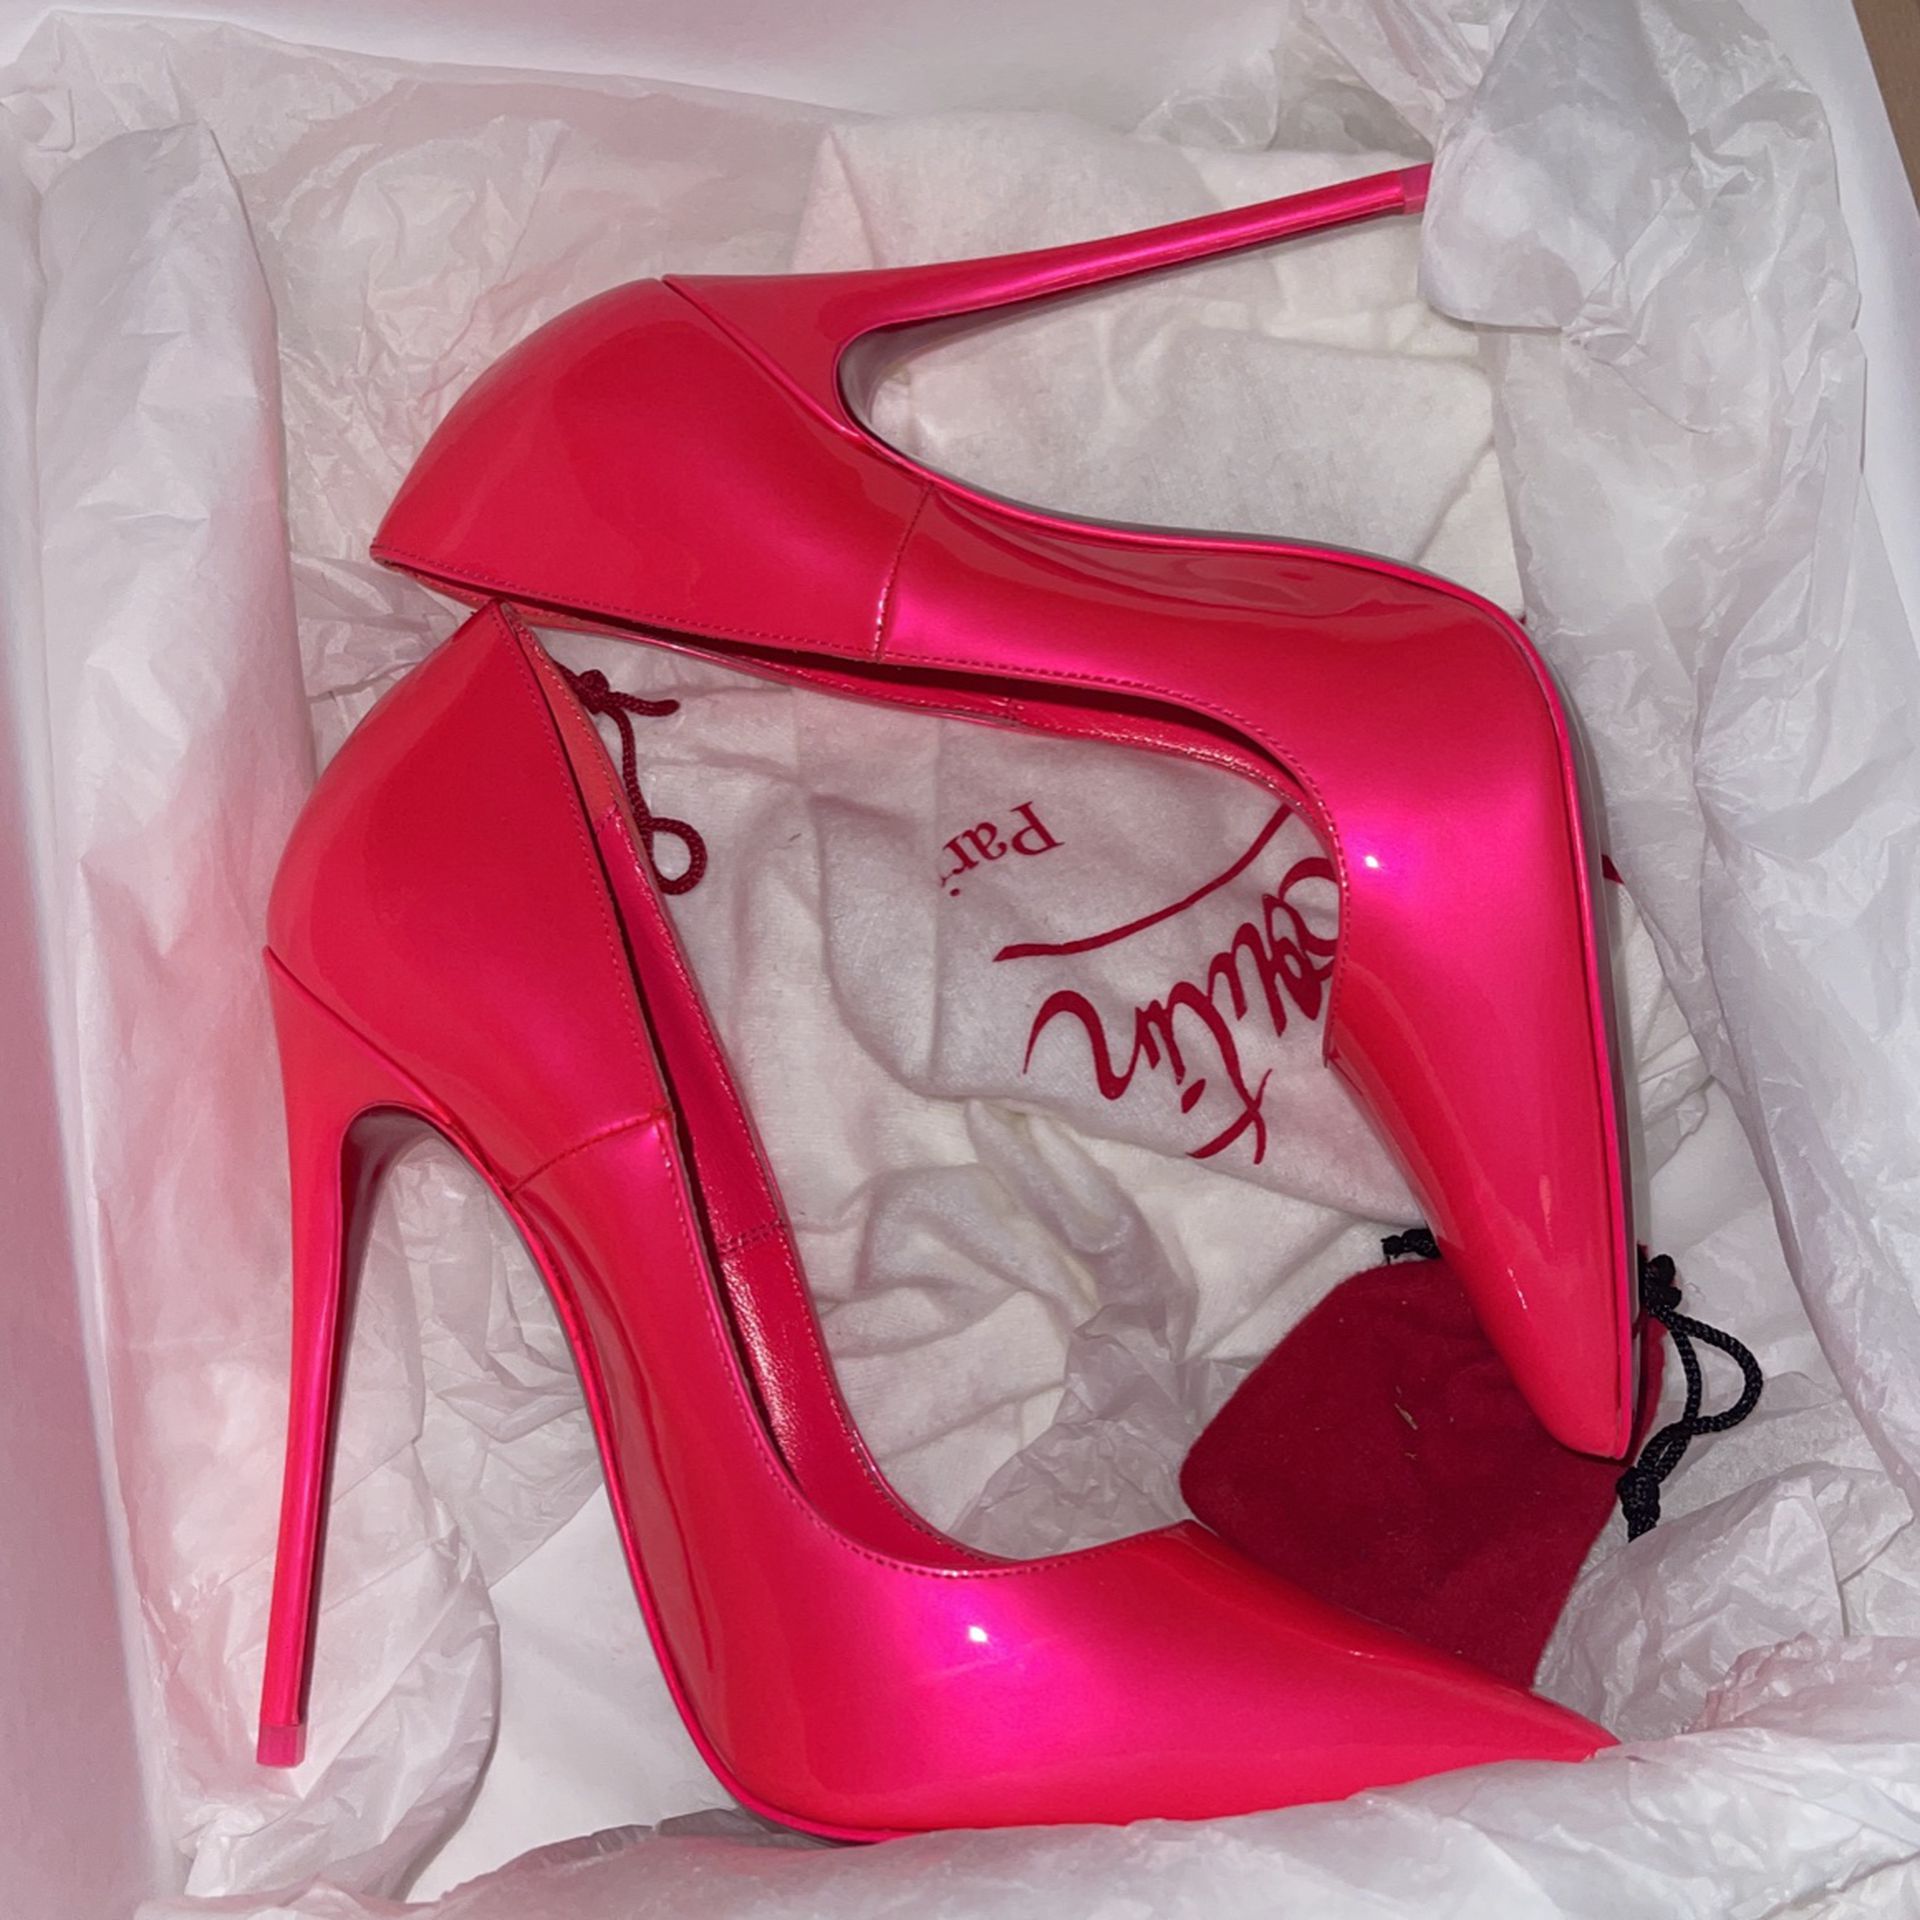 Christian Louboutin Hot Pink heels